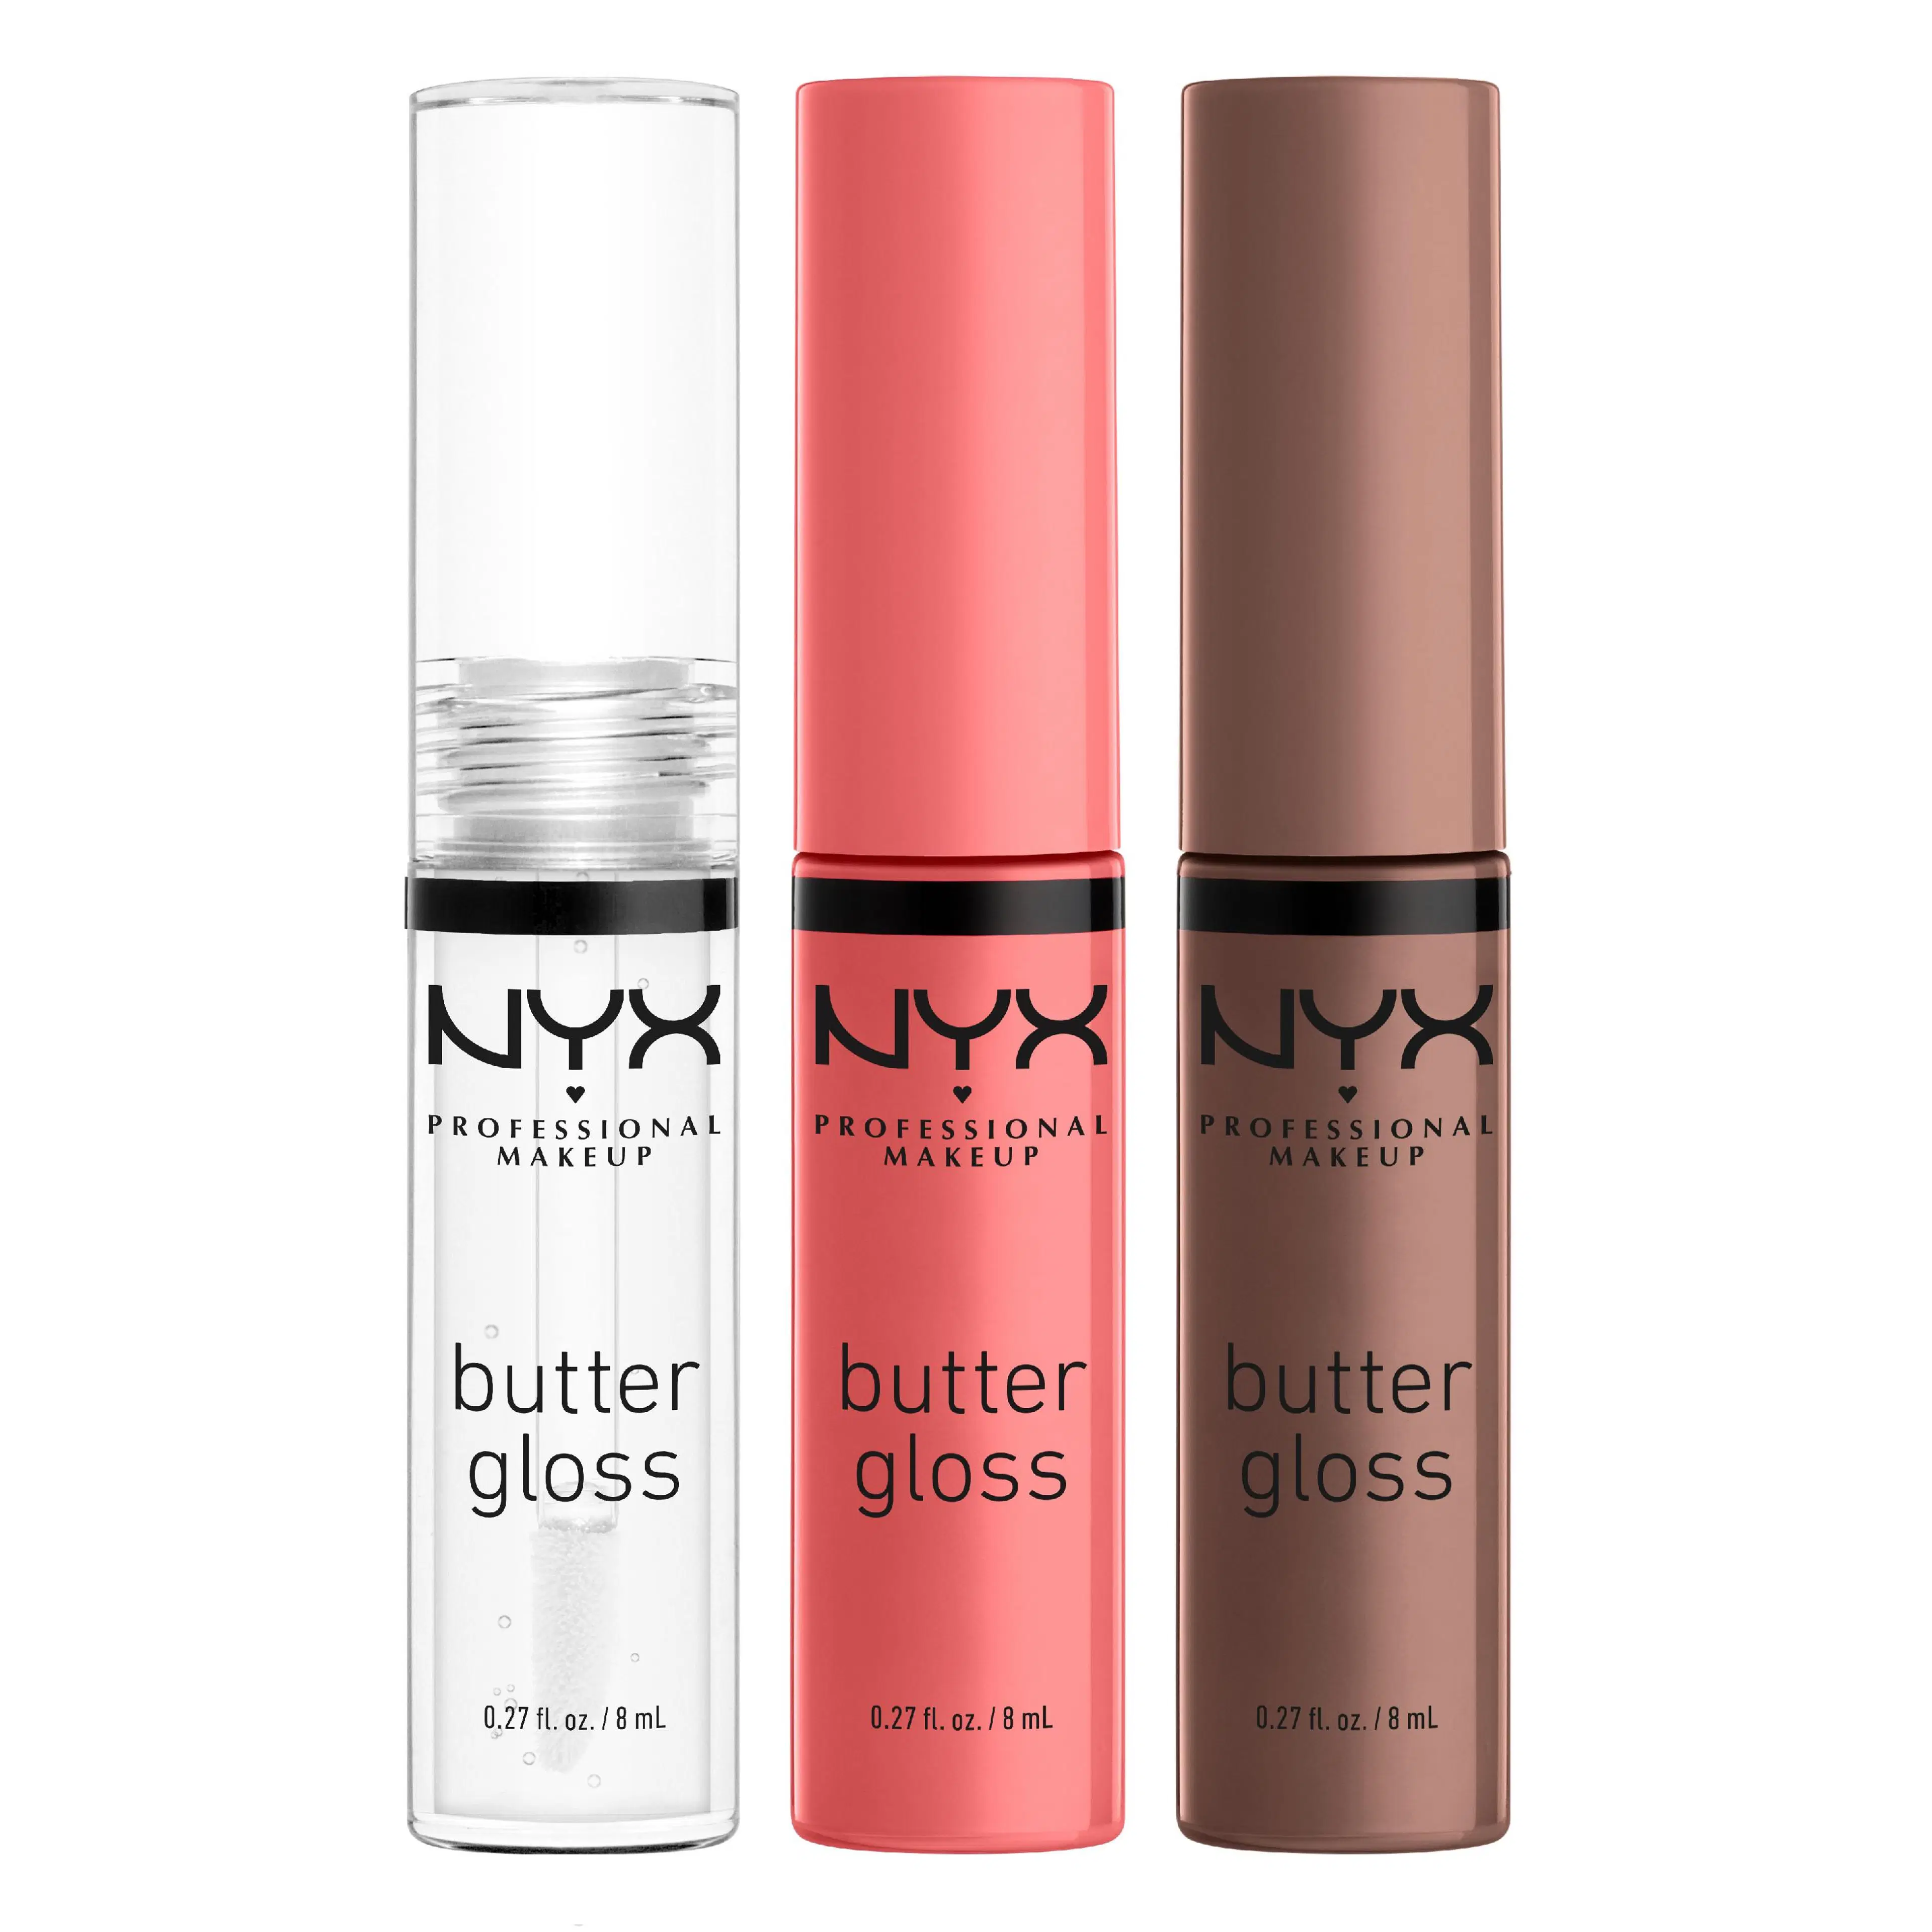 NYX Professional Makeup Butter Gloss Lip Trio lahjapakkaus